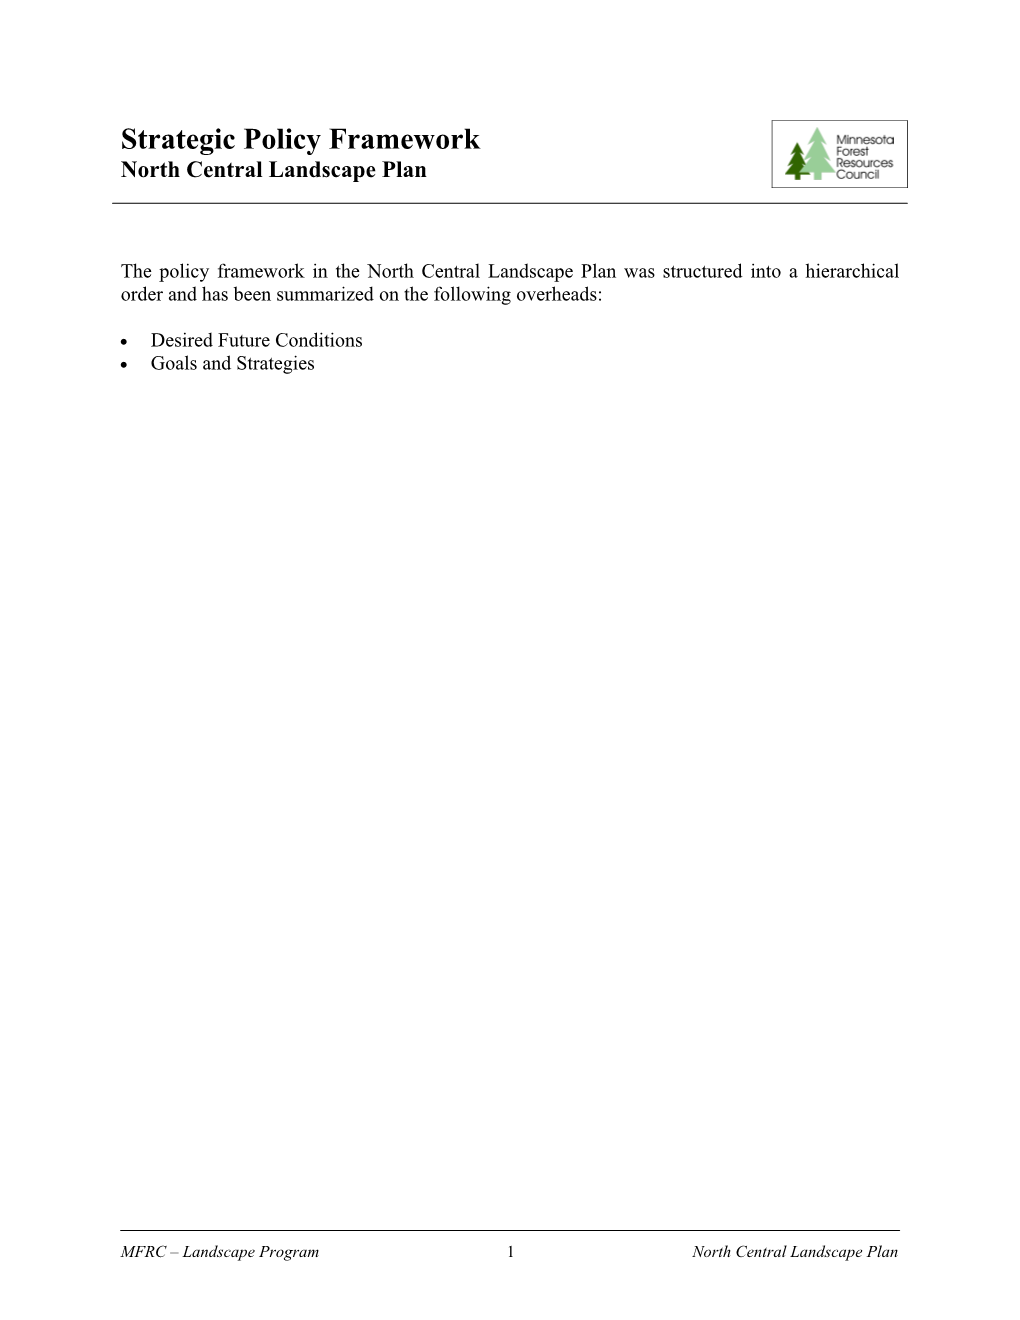 Strategic Policy Framework: North Central Landscape Plan